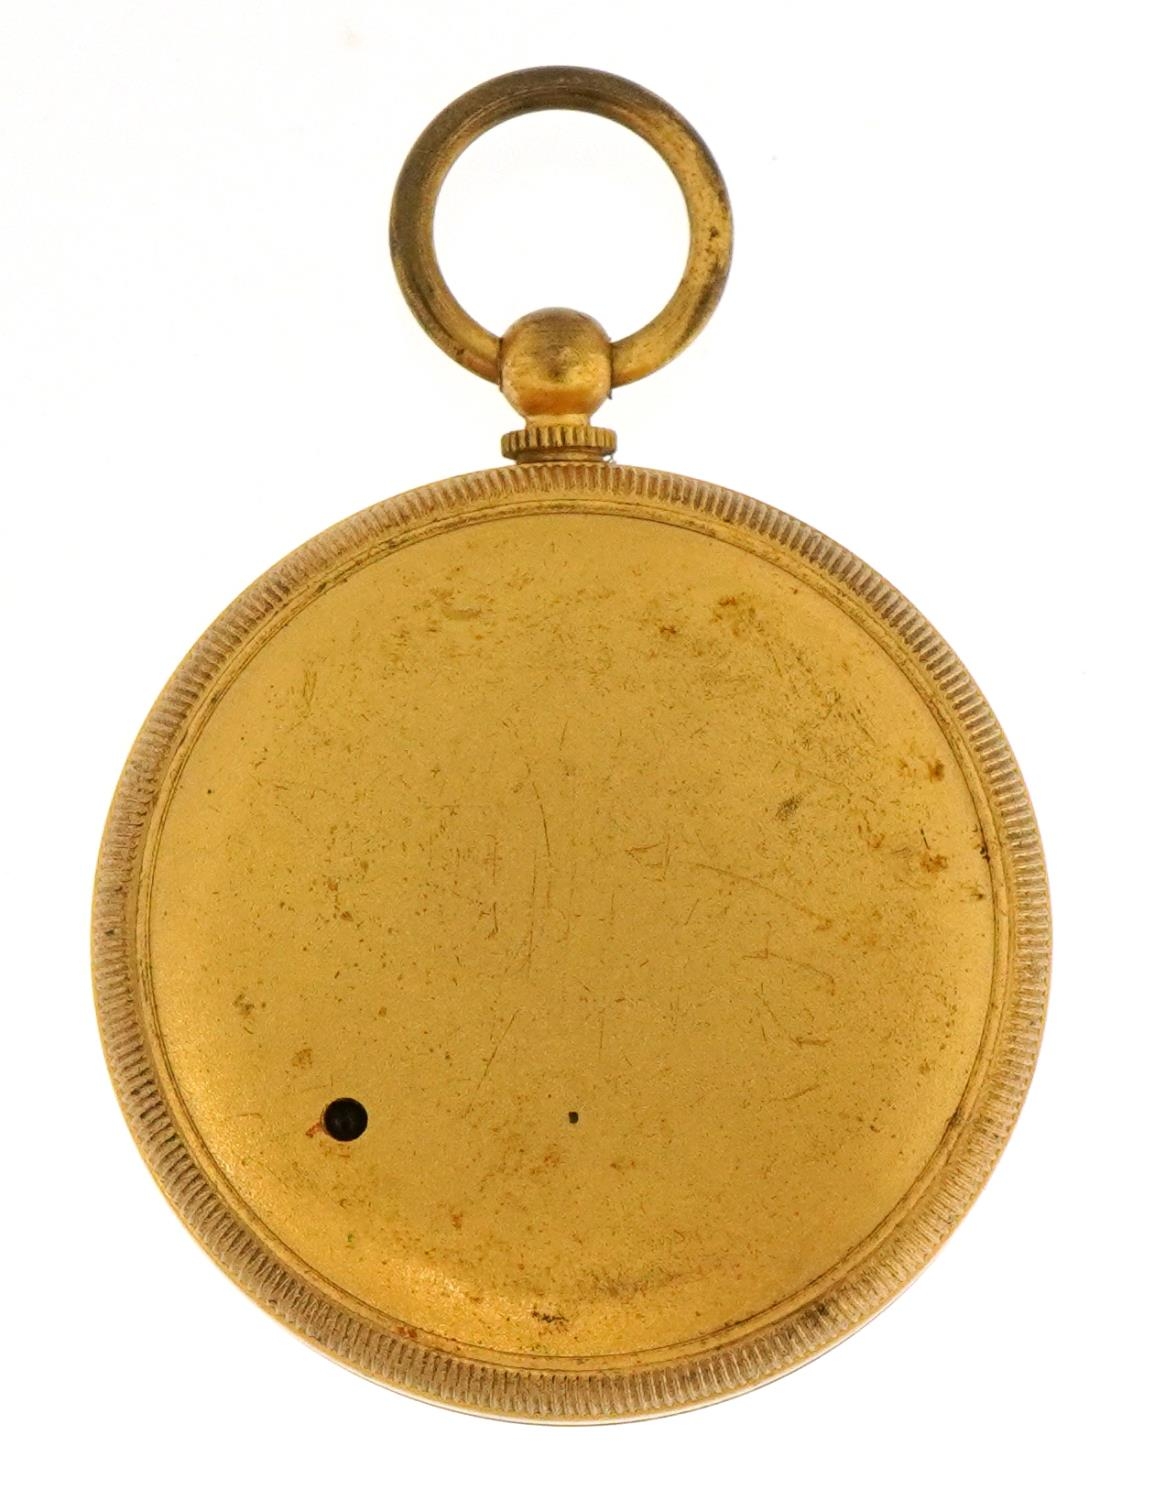 Gilt brass compensated pocket barometer, 5cm in diameter - Image 2 of 2